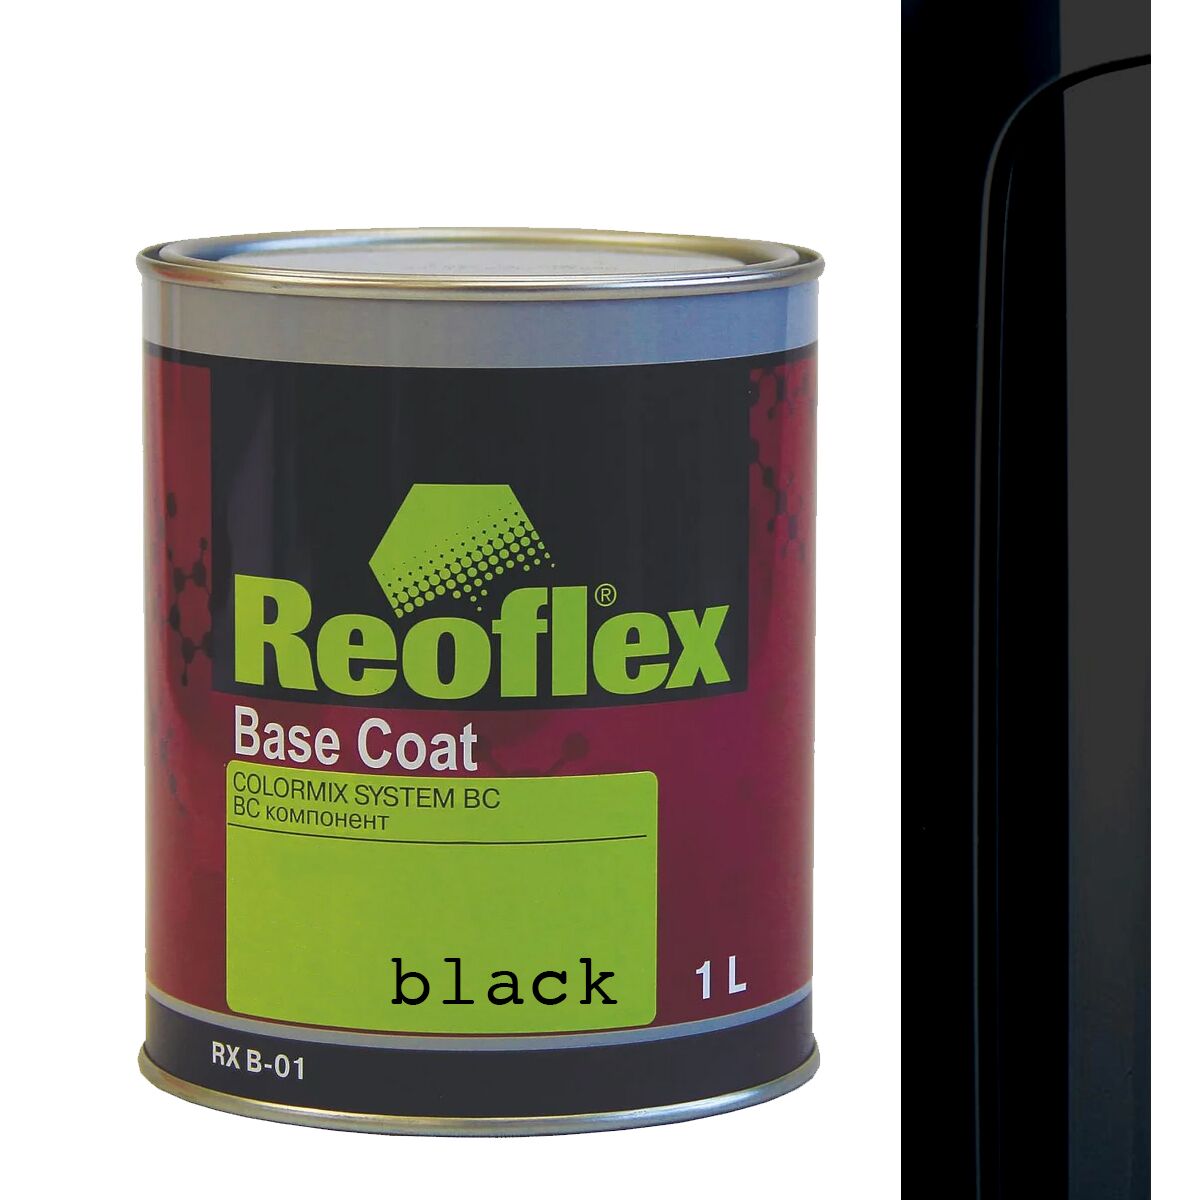 Reoflex black